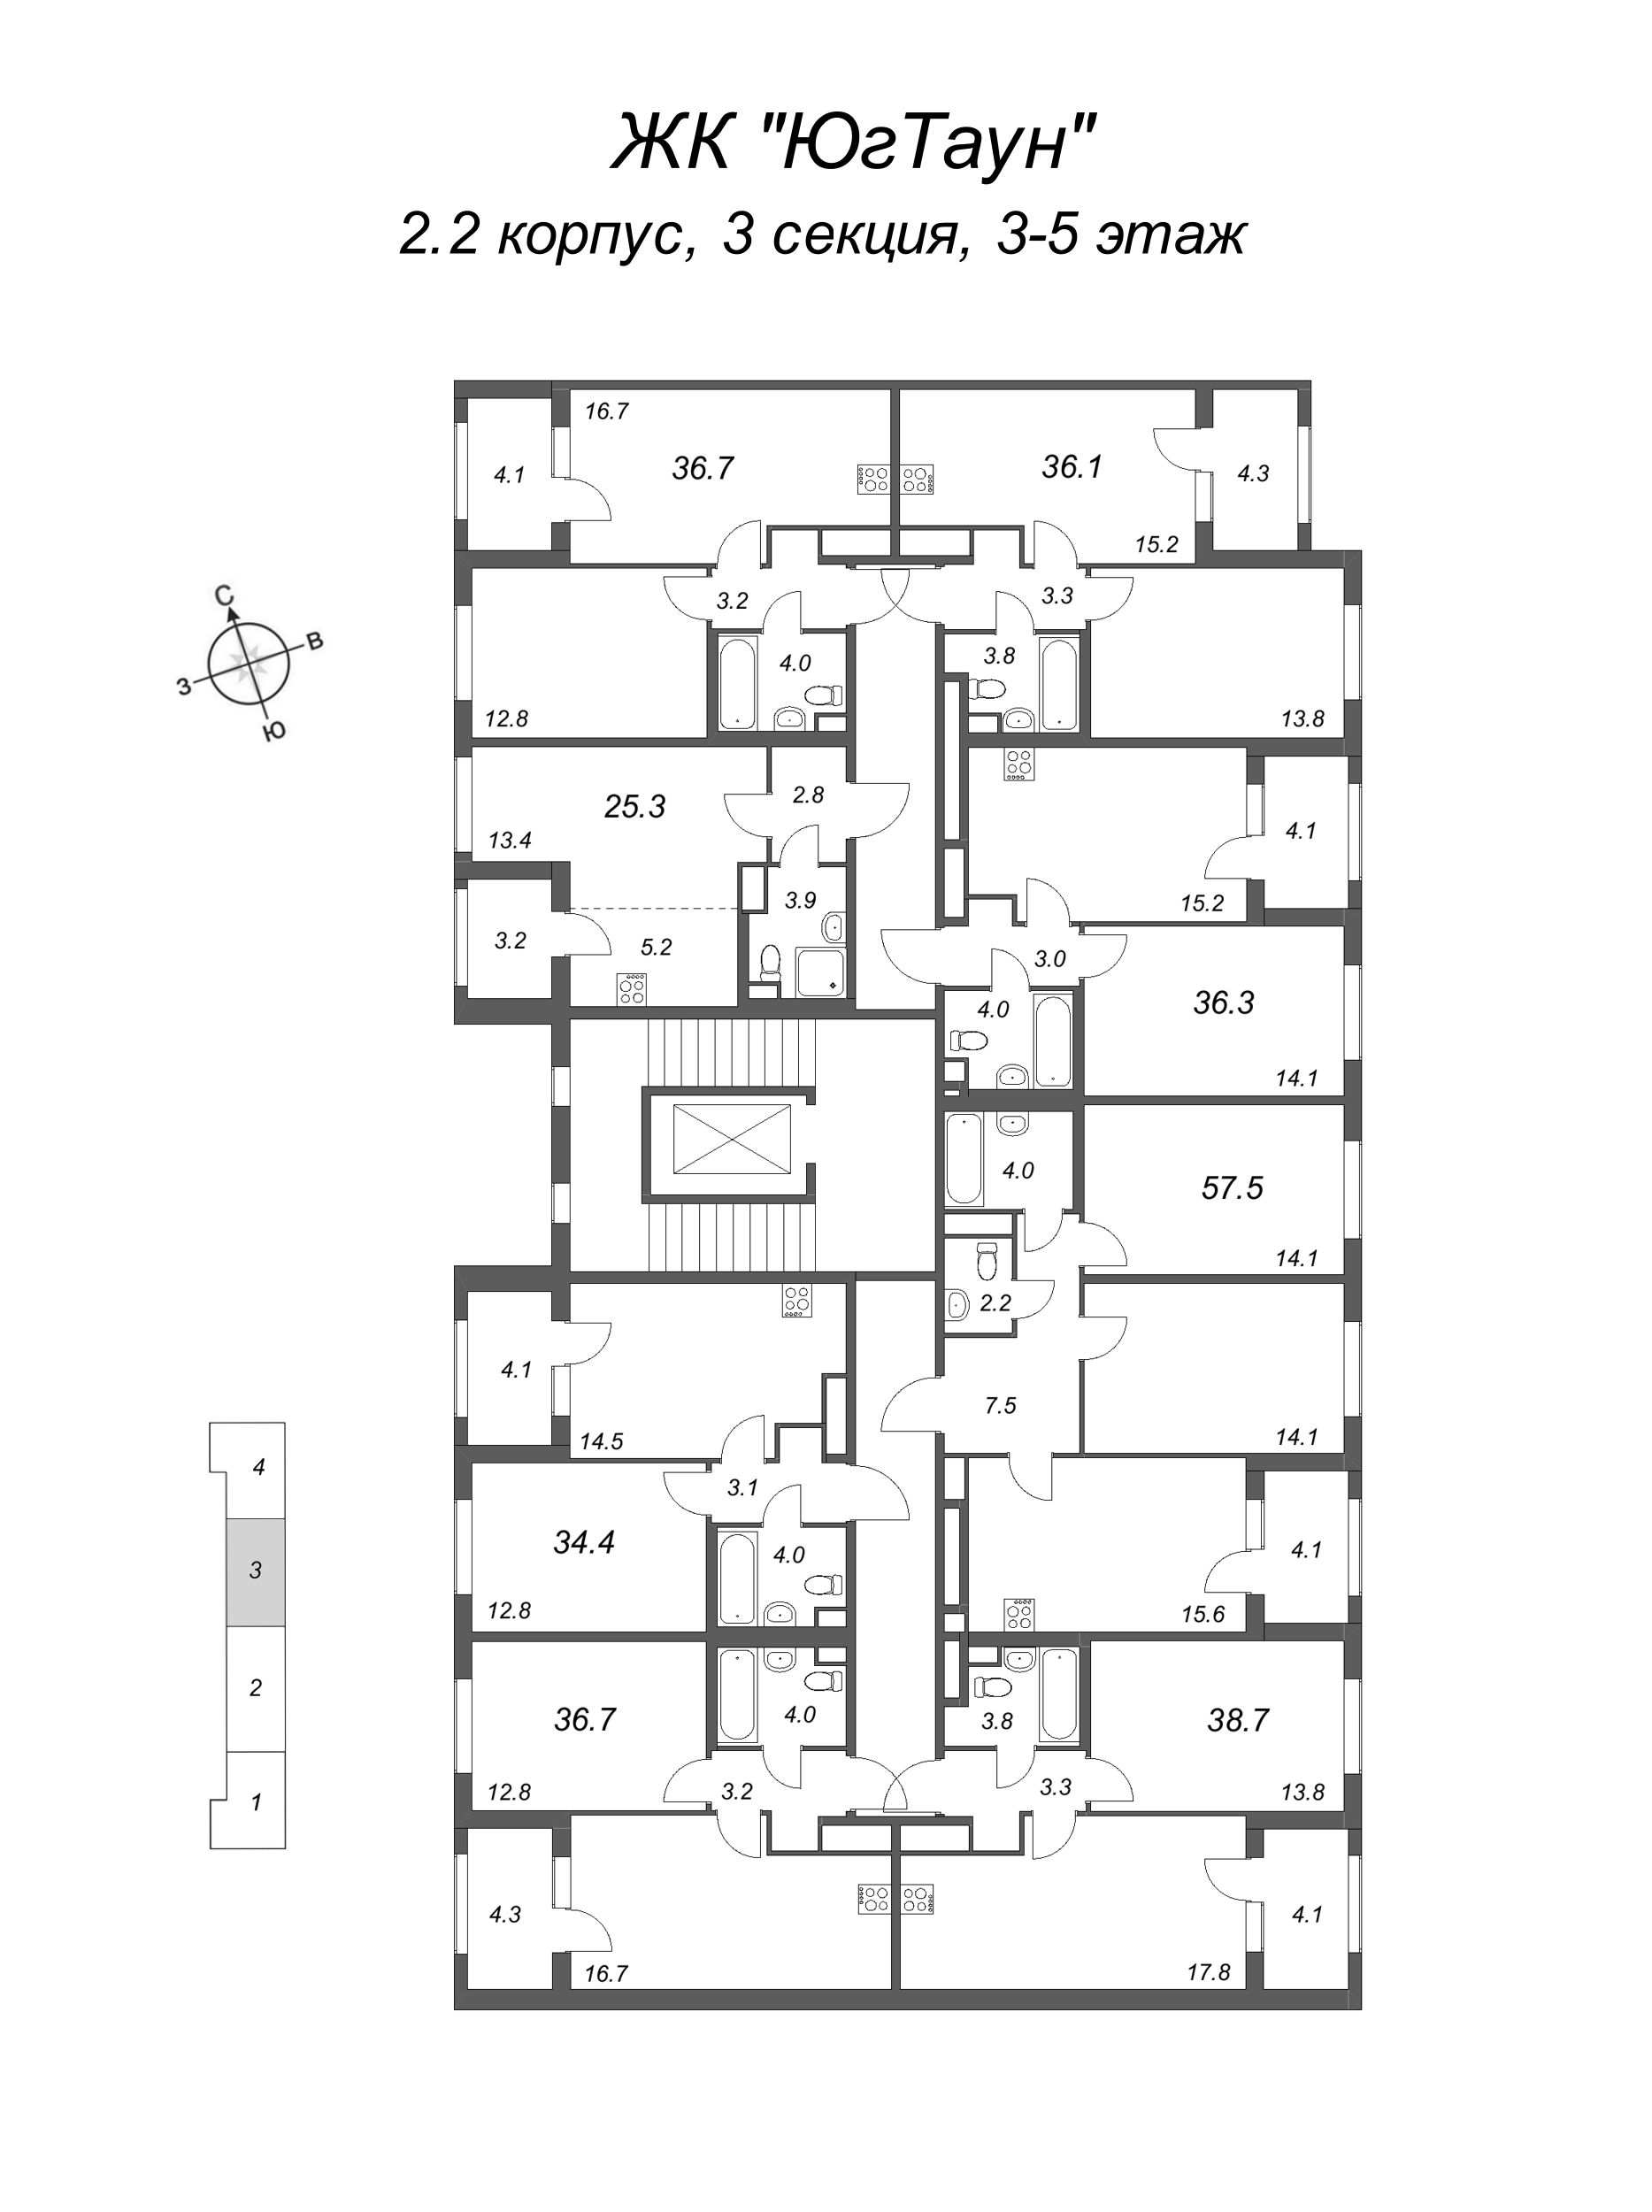 2-комнатная (Евро) квартира, 36.7 м² - планировка этажа